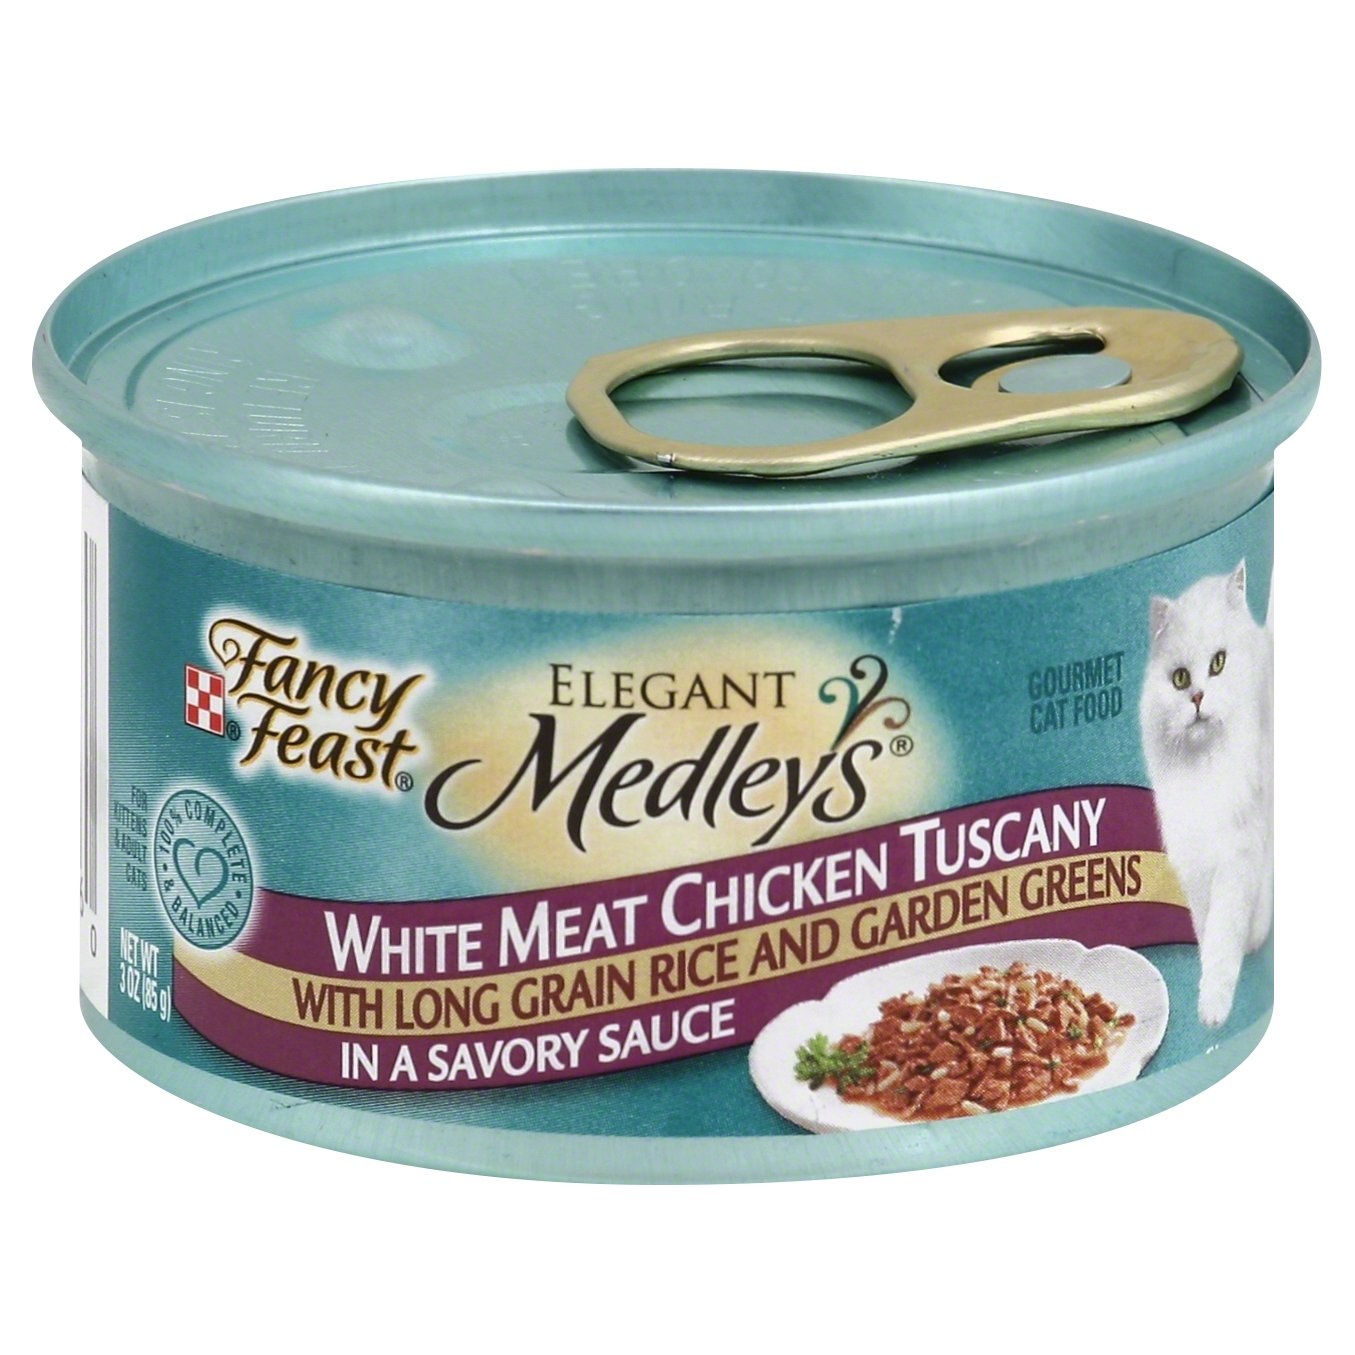 Fancy Feast Elegant Medleys Cat Food, White Meat Chicken Tuscany Shipt